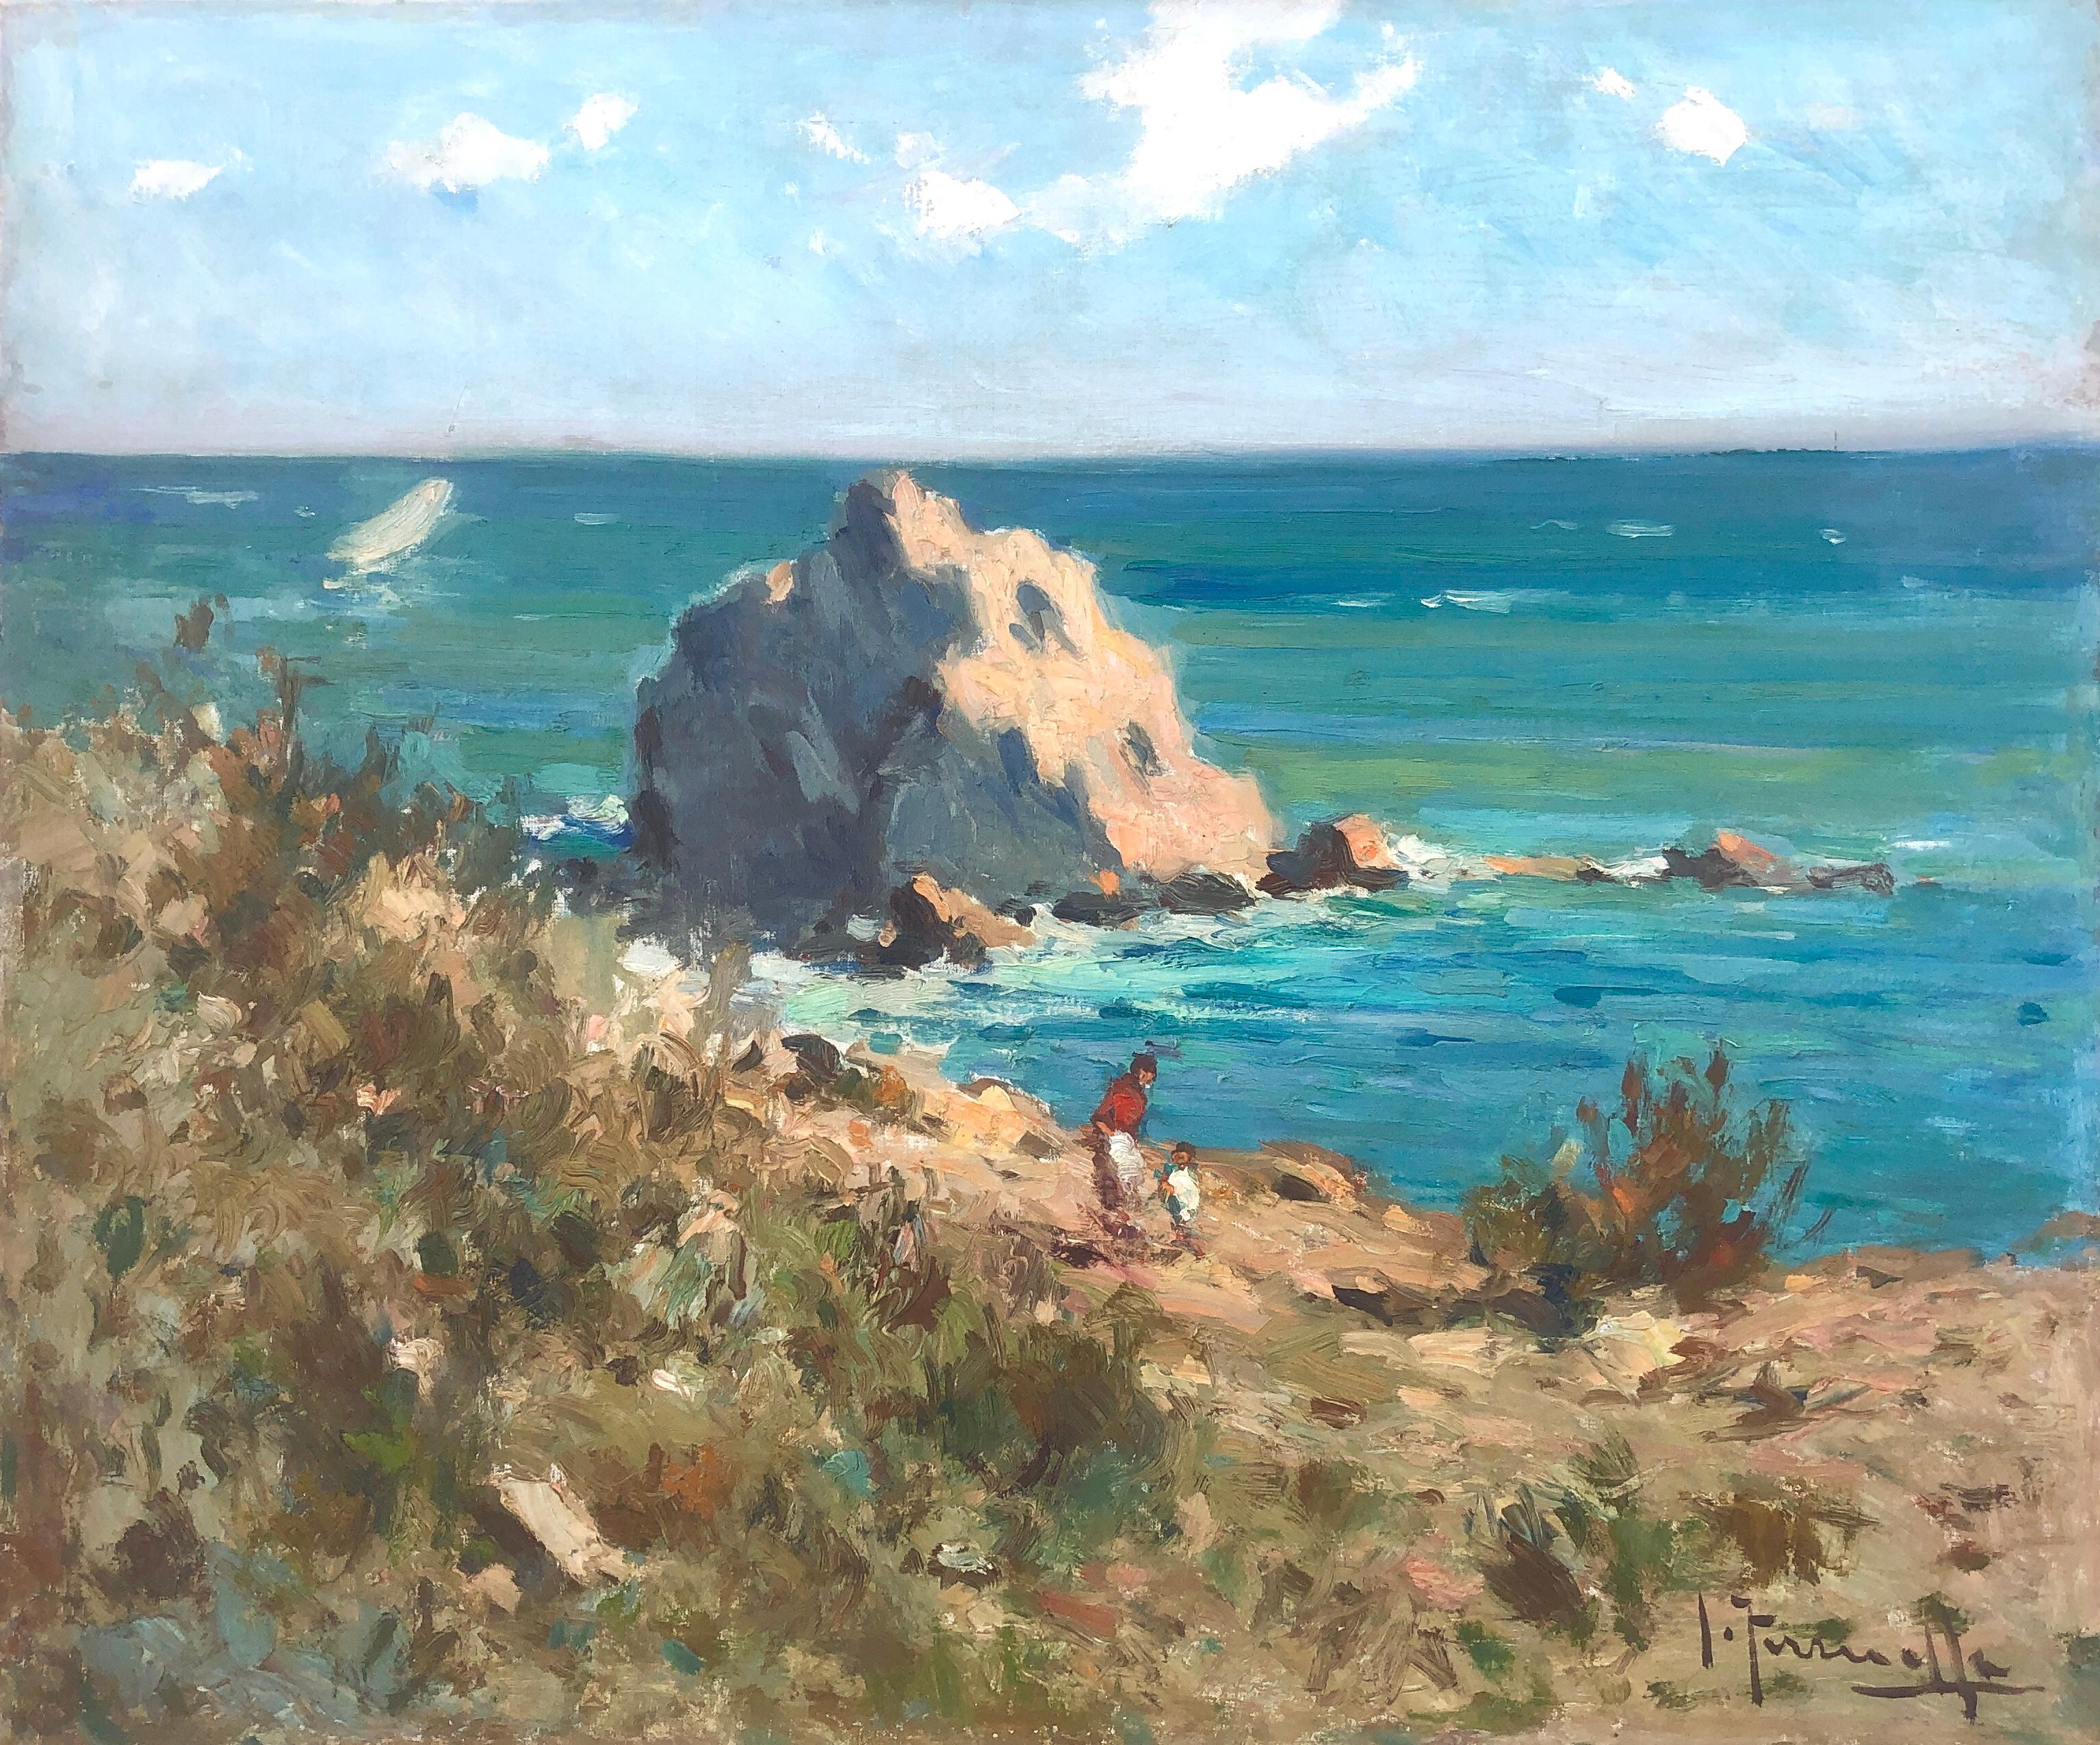 Joaquin Terruella Matilla Landscape Painting - Costa Brava seascape oil on canvas painting impressionism Spain mediterranean